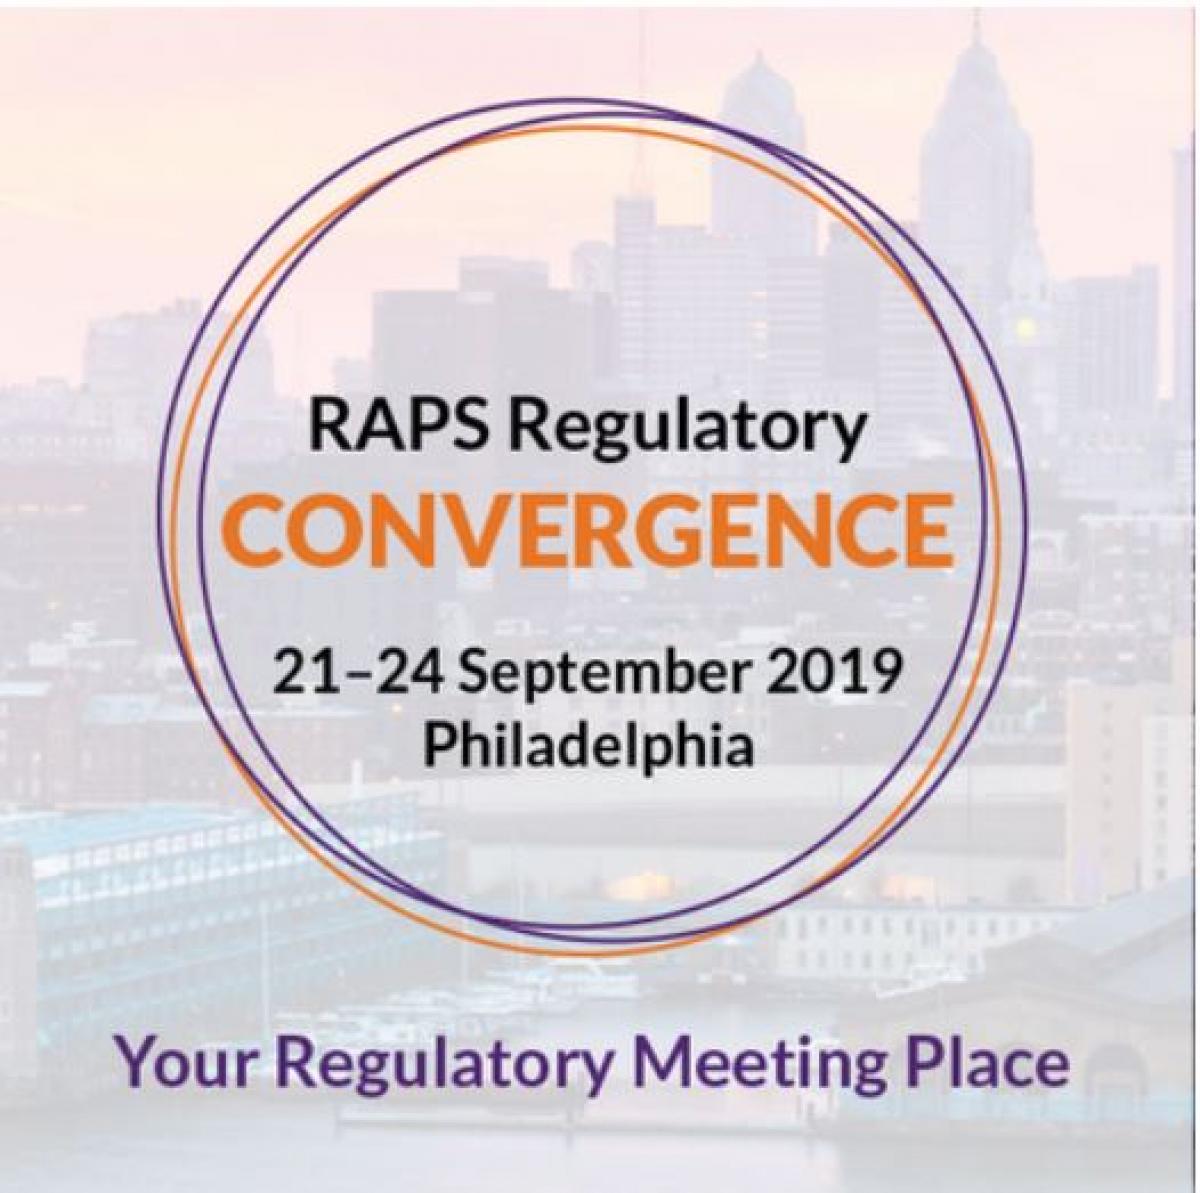 RAPS Regulatory CONVERGENCE 2019 knoell